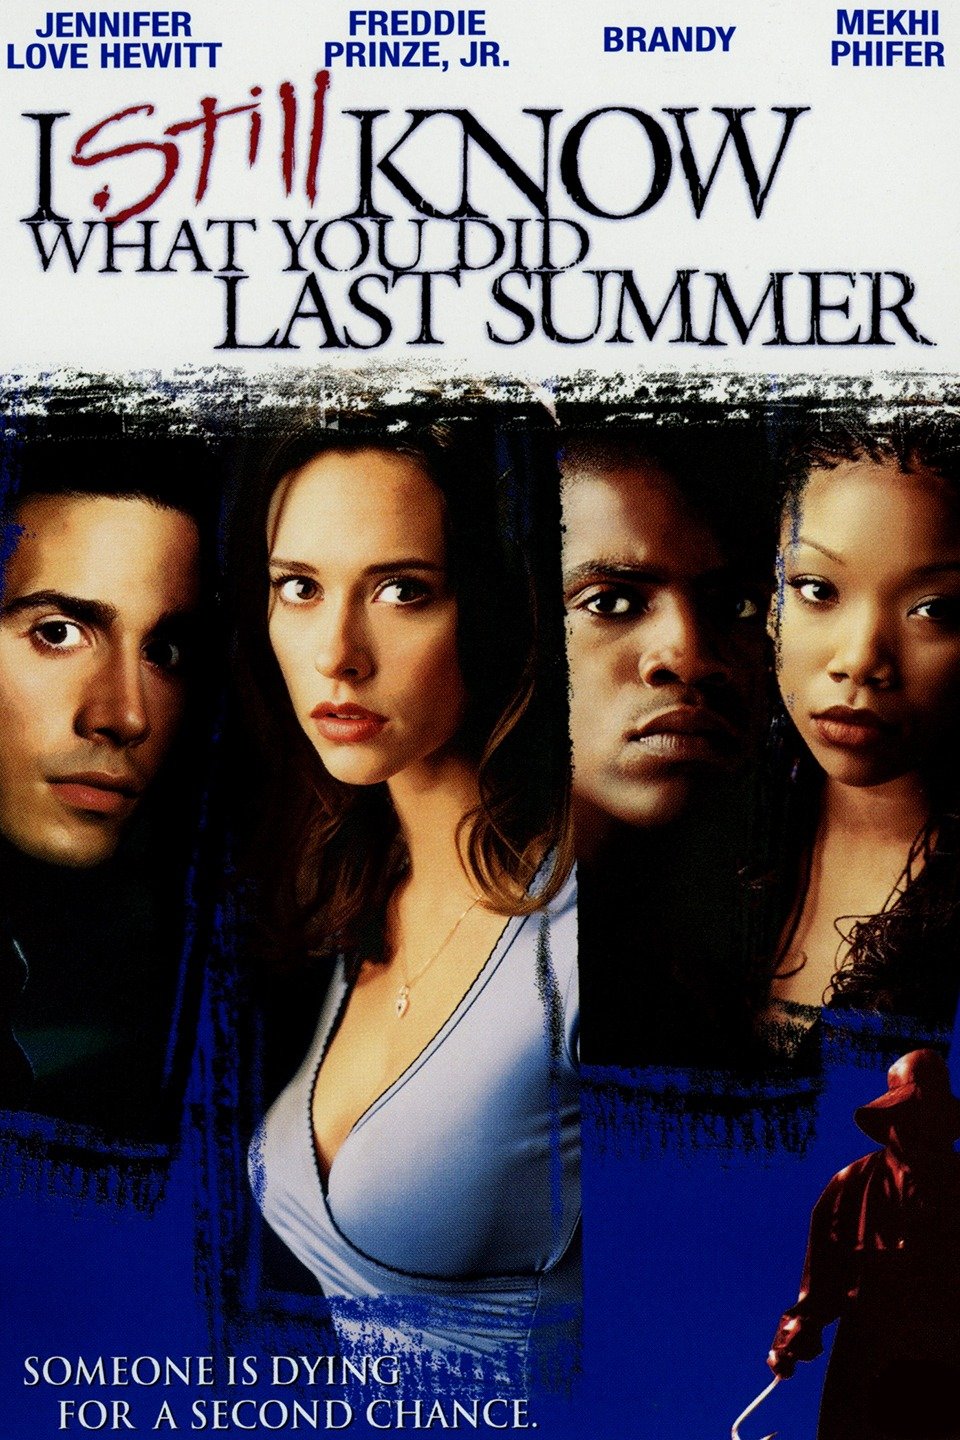 [MINI-HD] I Still Know What You Did Last Summer (1998) ซัมเมอร์สยอง ต้องหวีด ภาค 2 [720P] [พากย์ไทย 5.1 + เสียงอังกฤษ 5.1] [บรรยายไทย + อังกฤษ] [เสียงไทย + ซับไทย] [PANDAFILE]